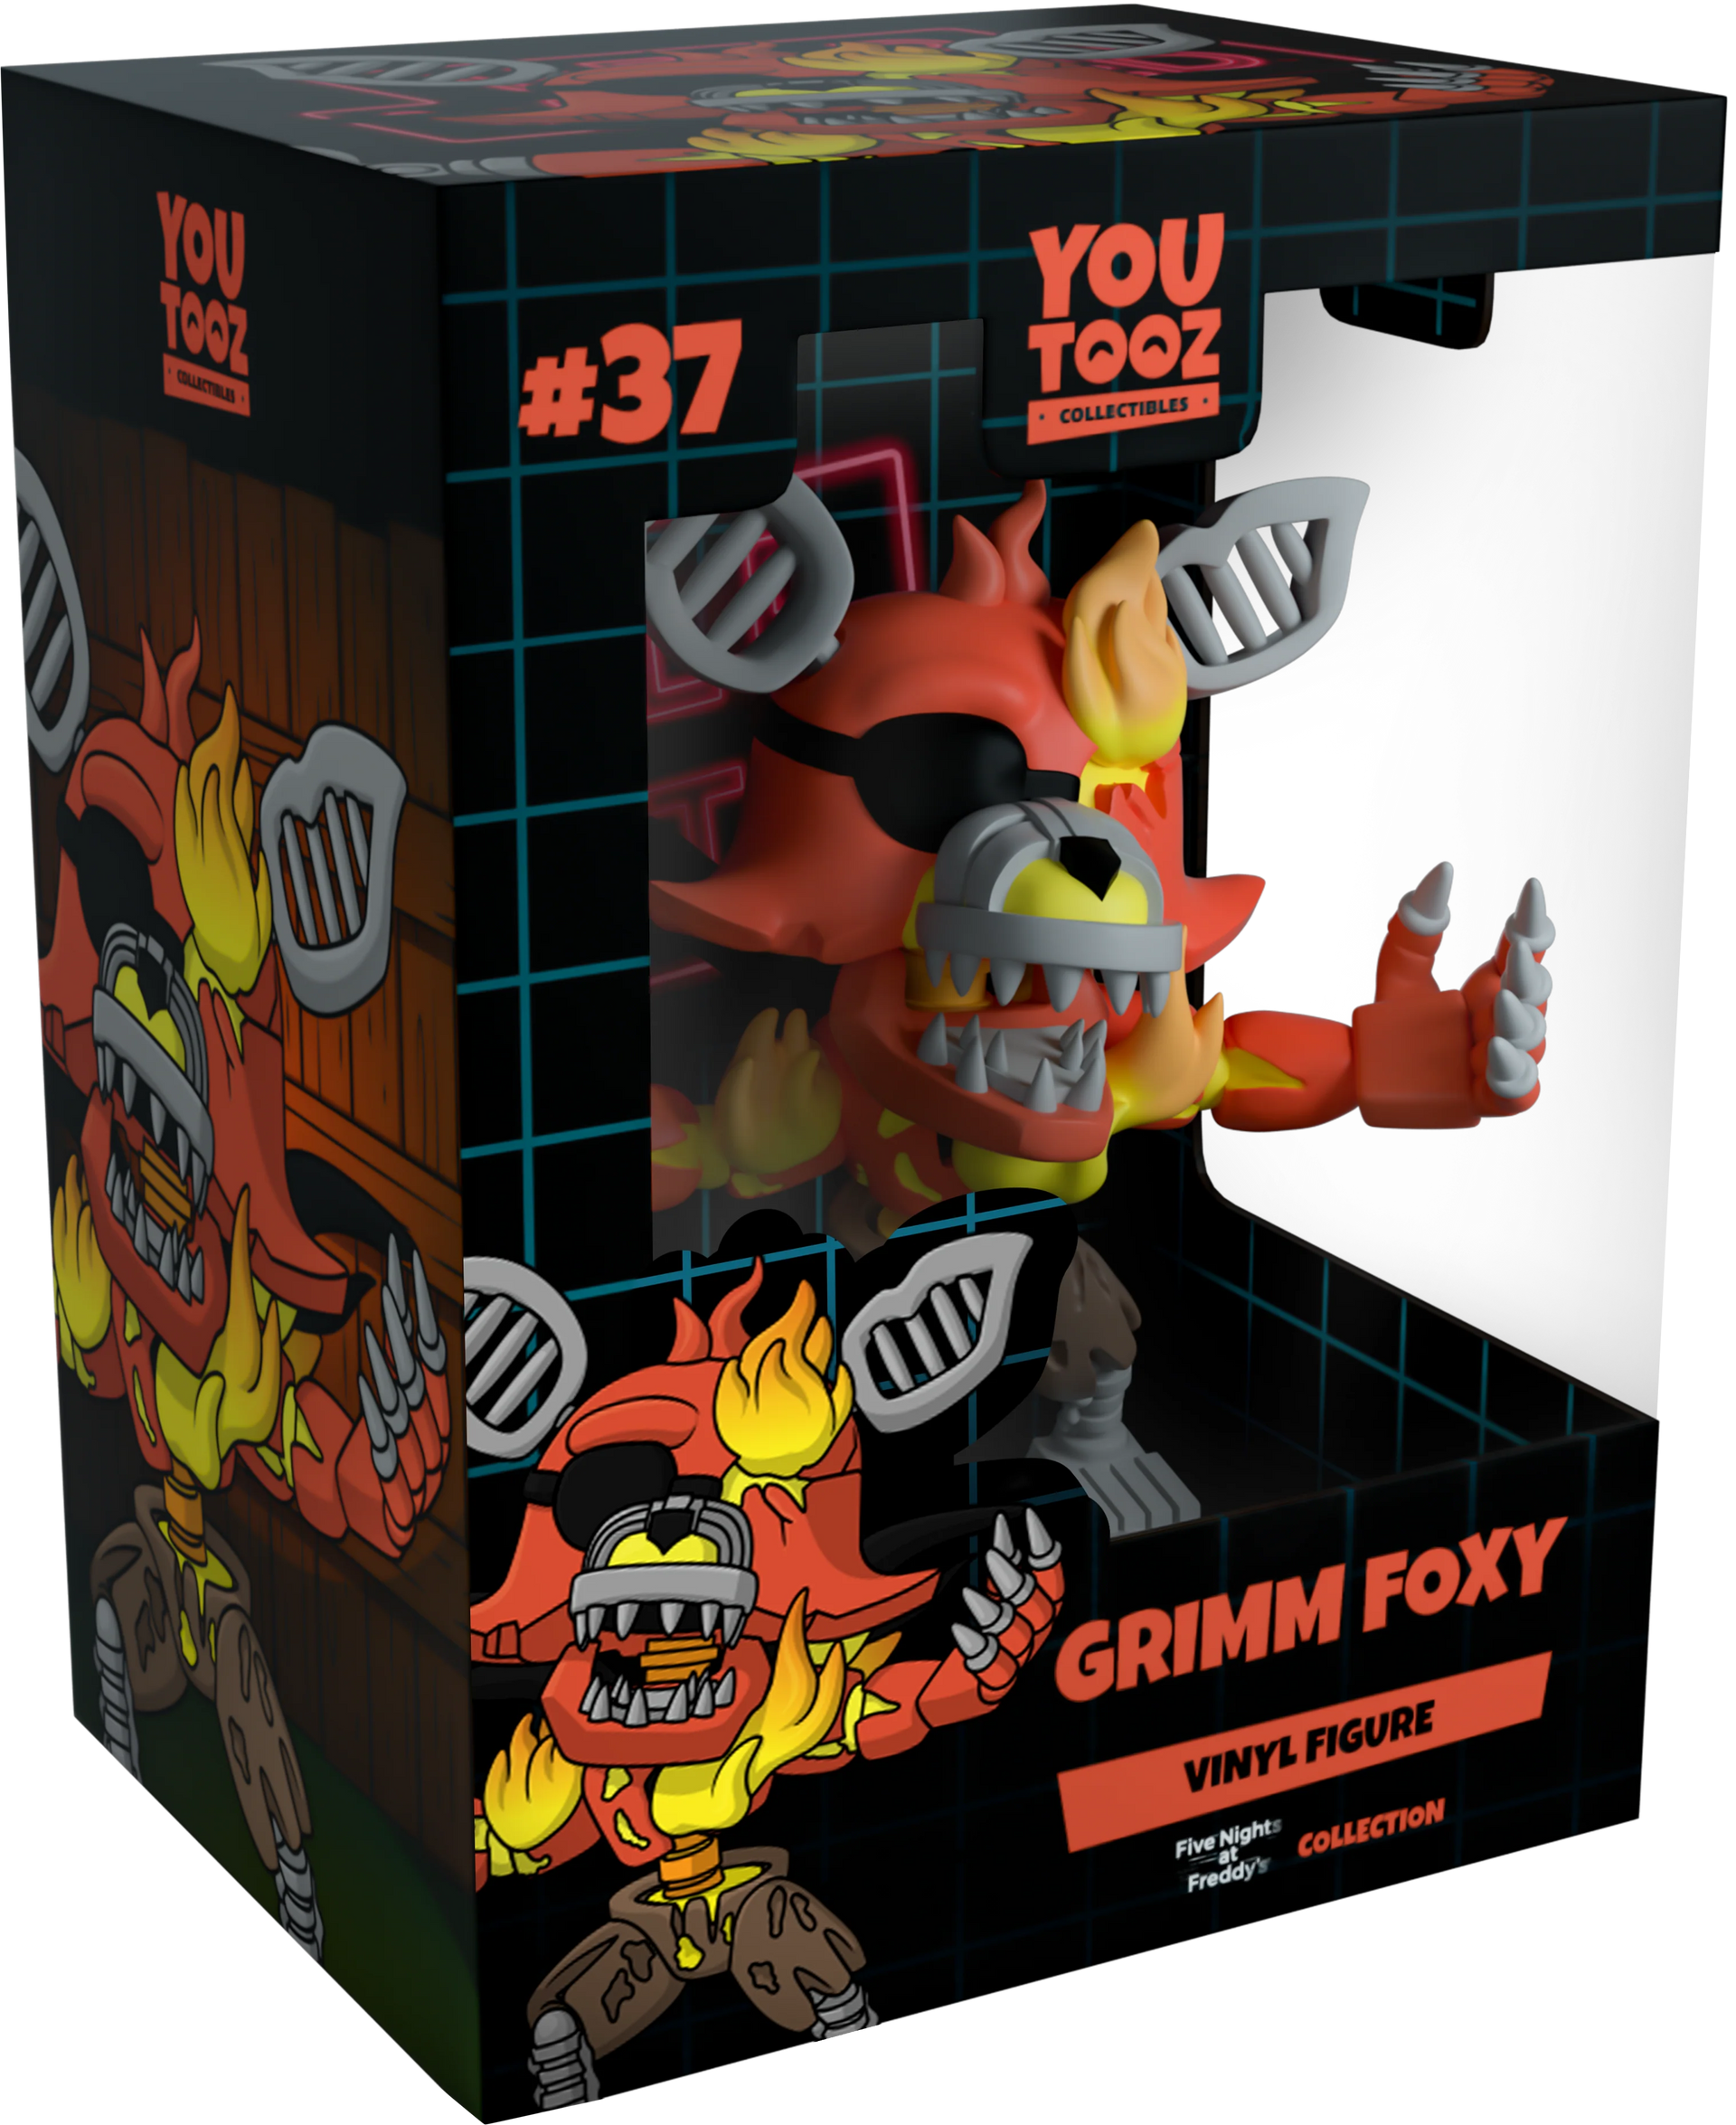 Figurine- FNAF DREADBEAR - Grimm Foxy - Action Figure POP 12